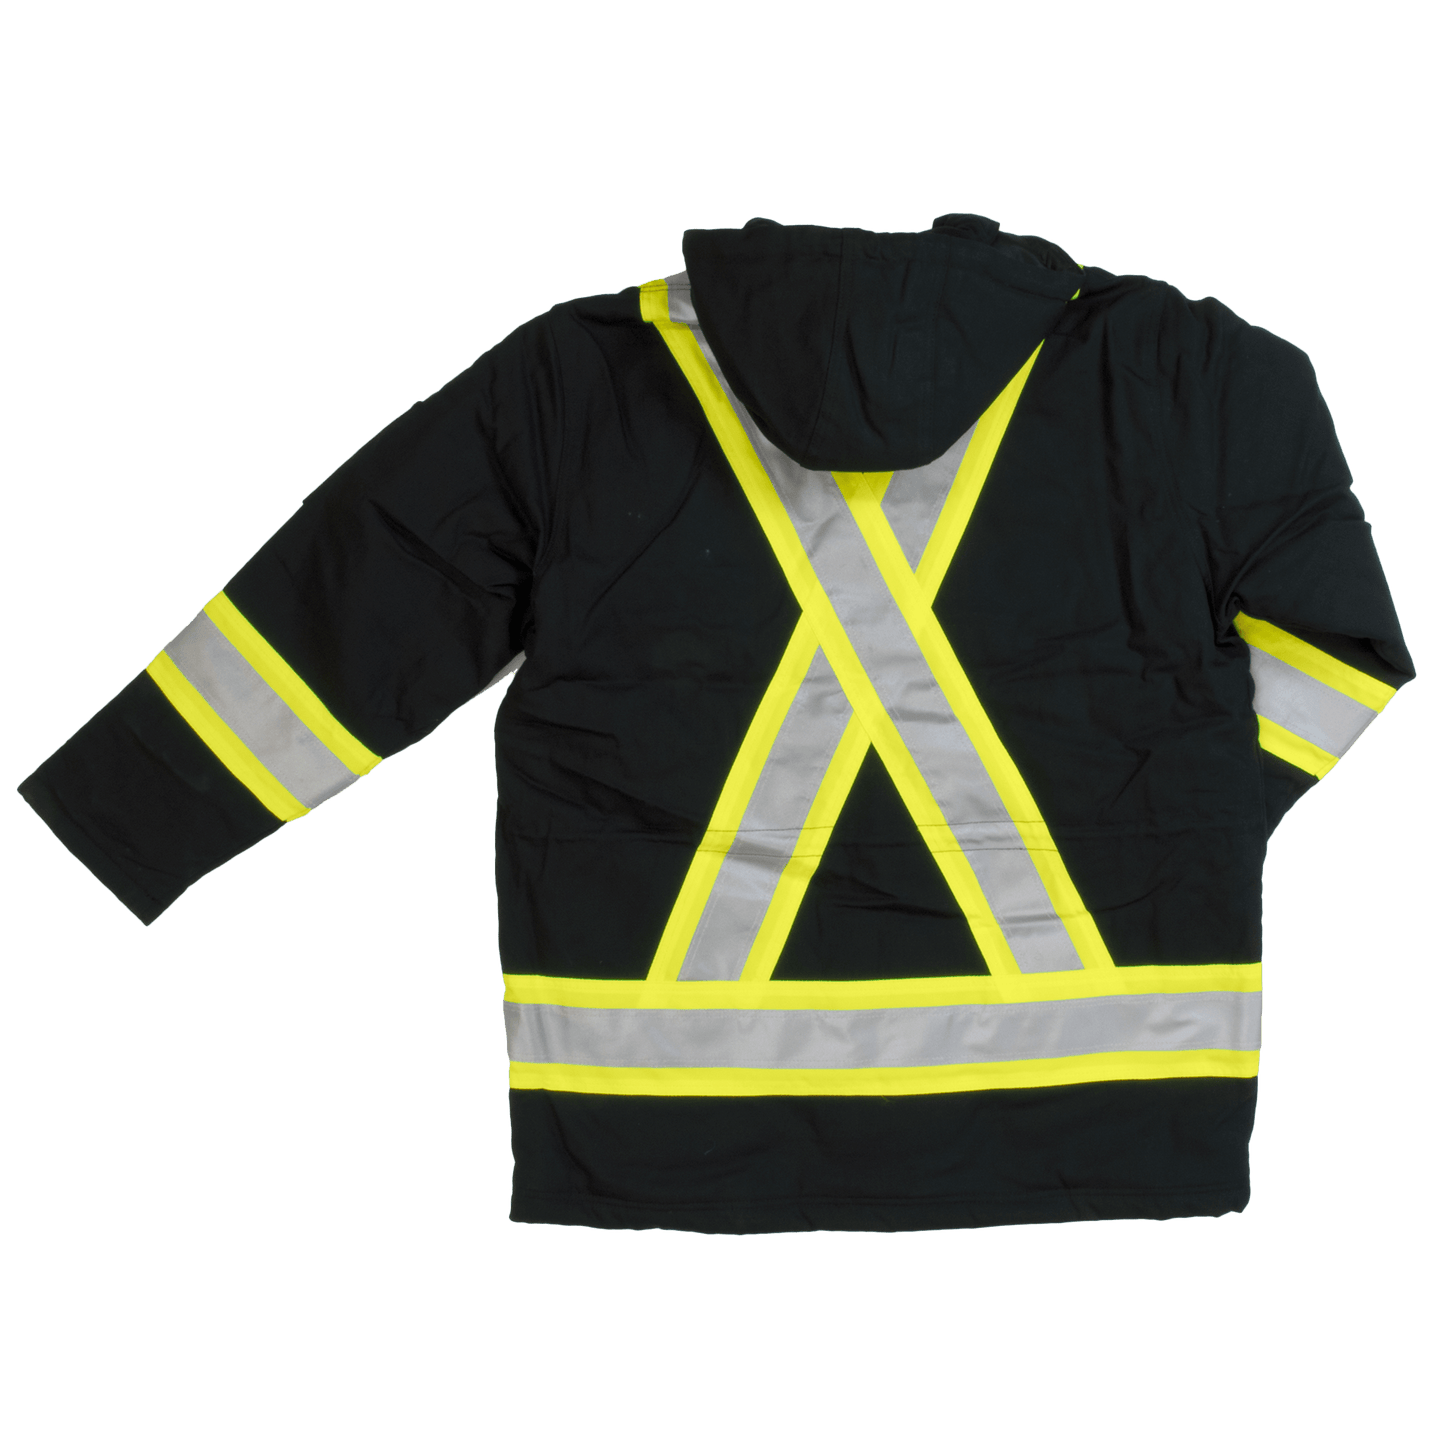 Tough Duck Fleece Lined Safety Jacket - S157 - Black - back